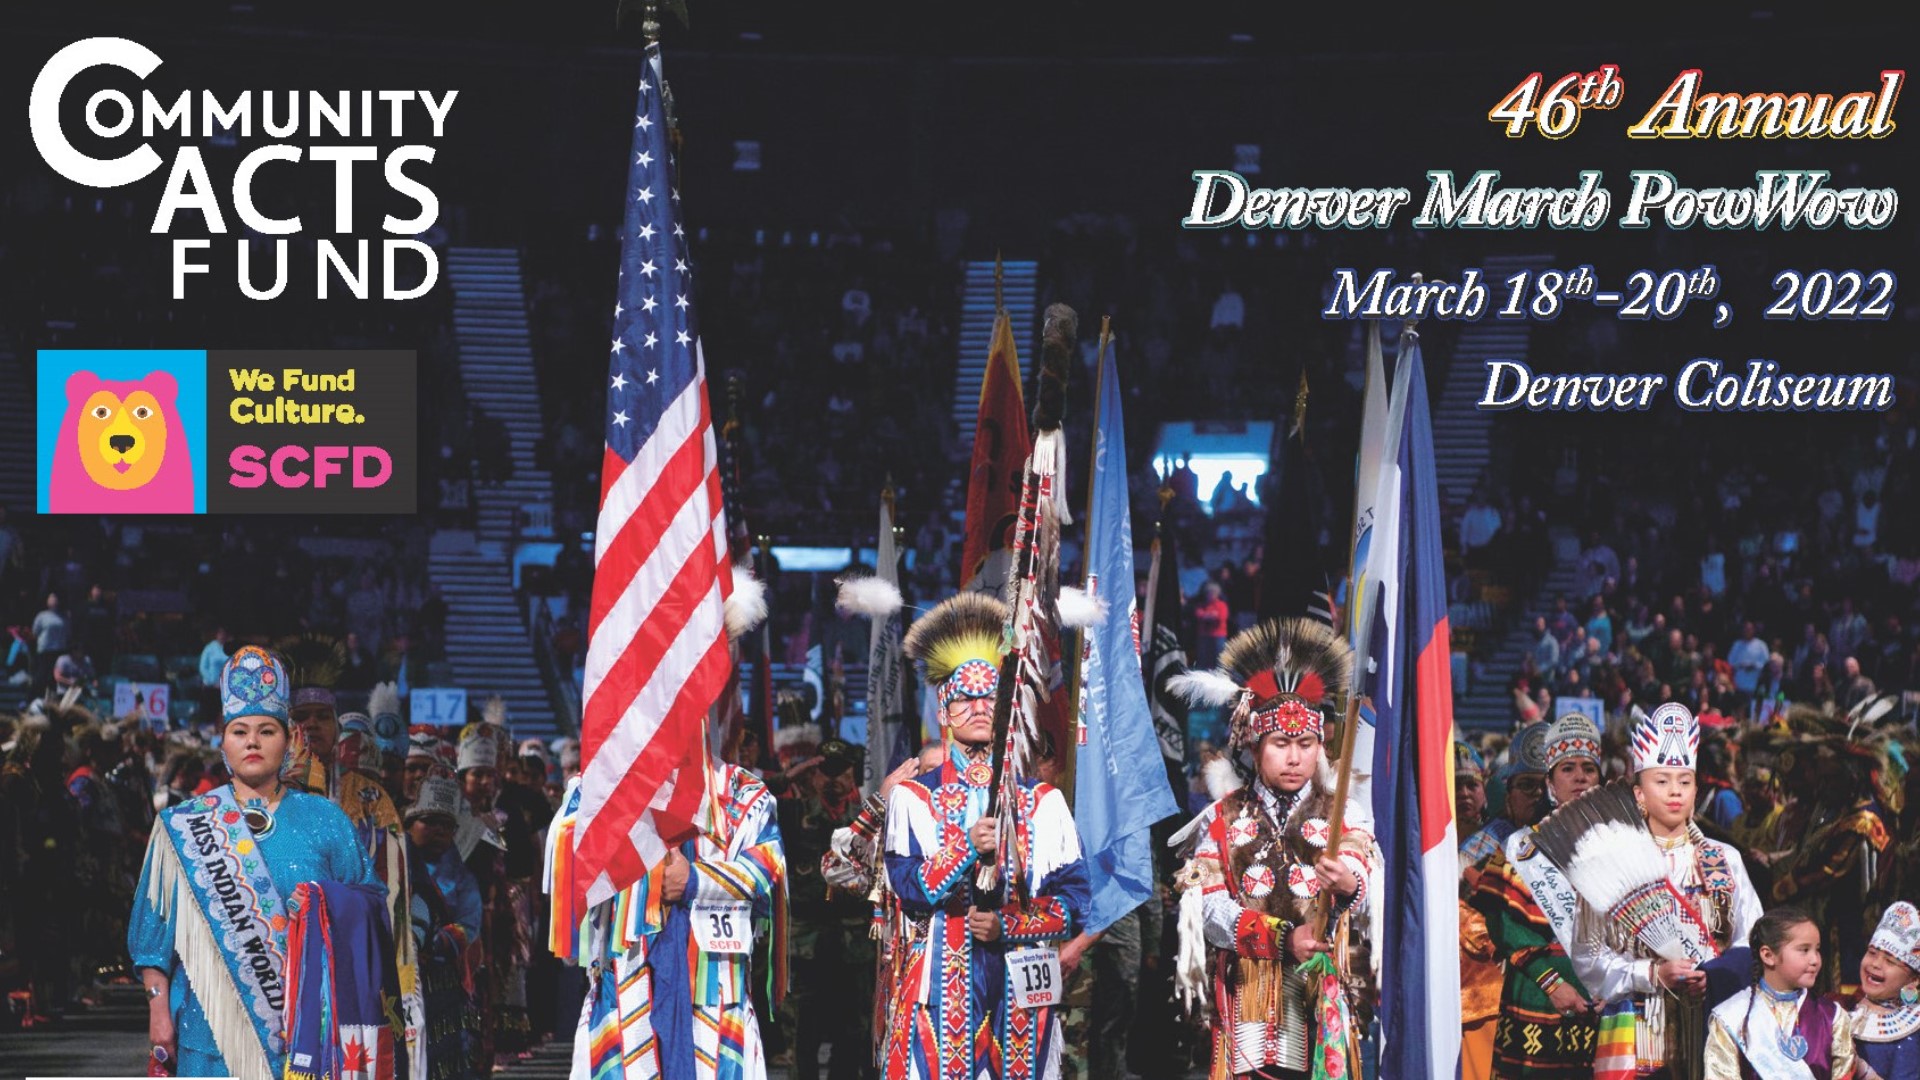 Denver March Powwow returns for 46th year at Denver Coliseum